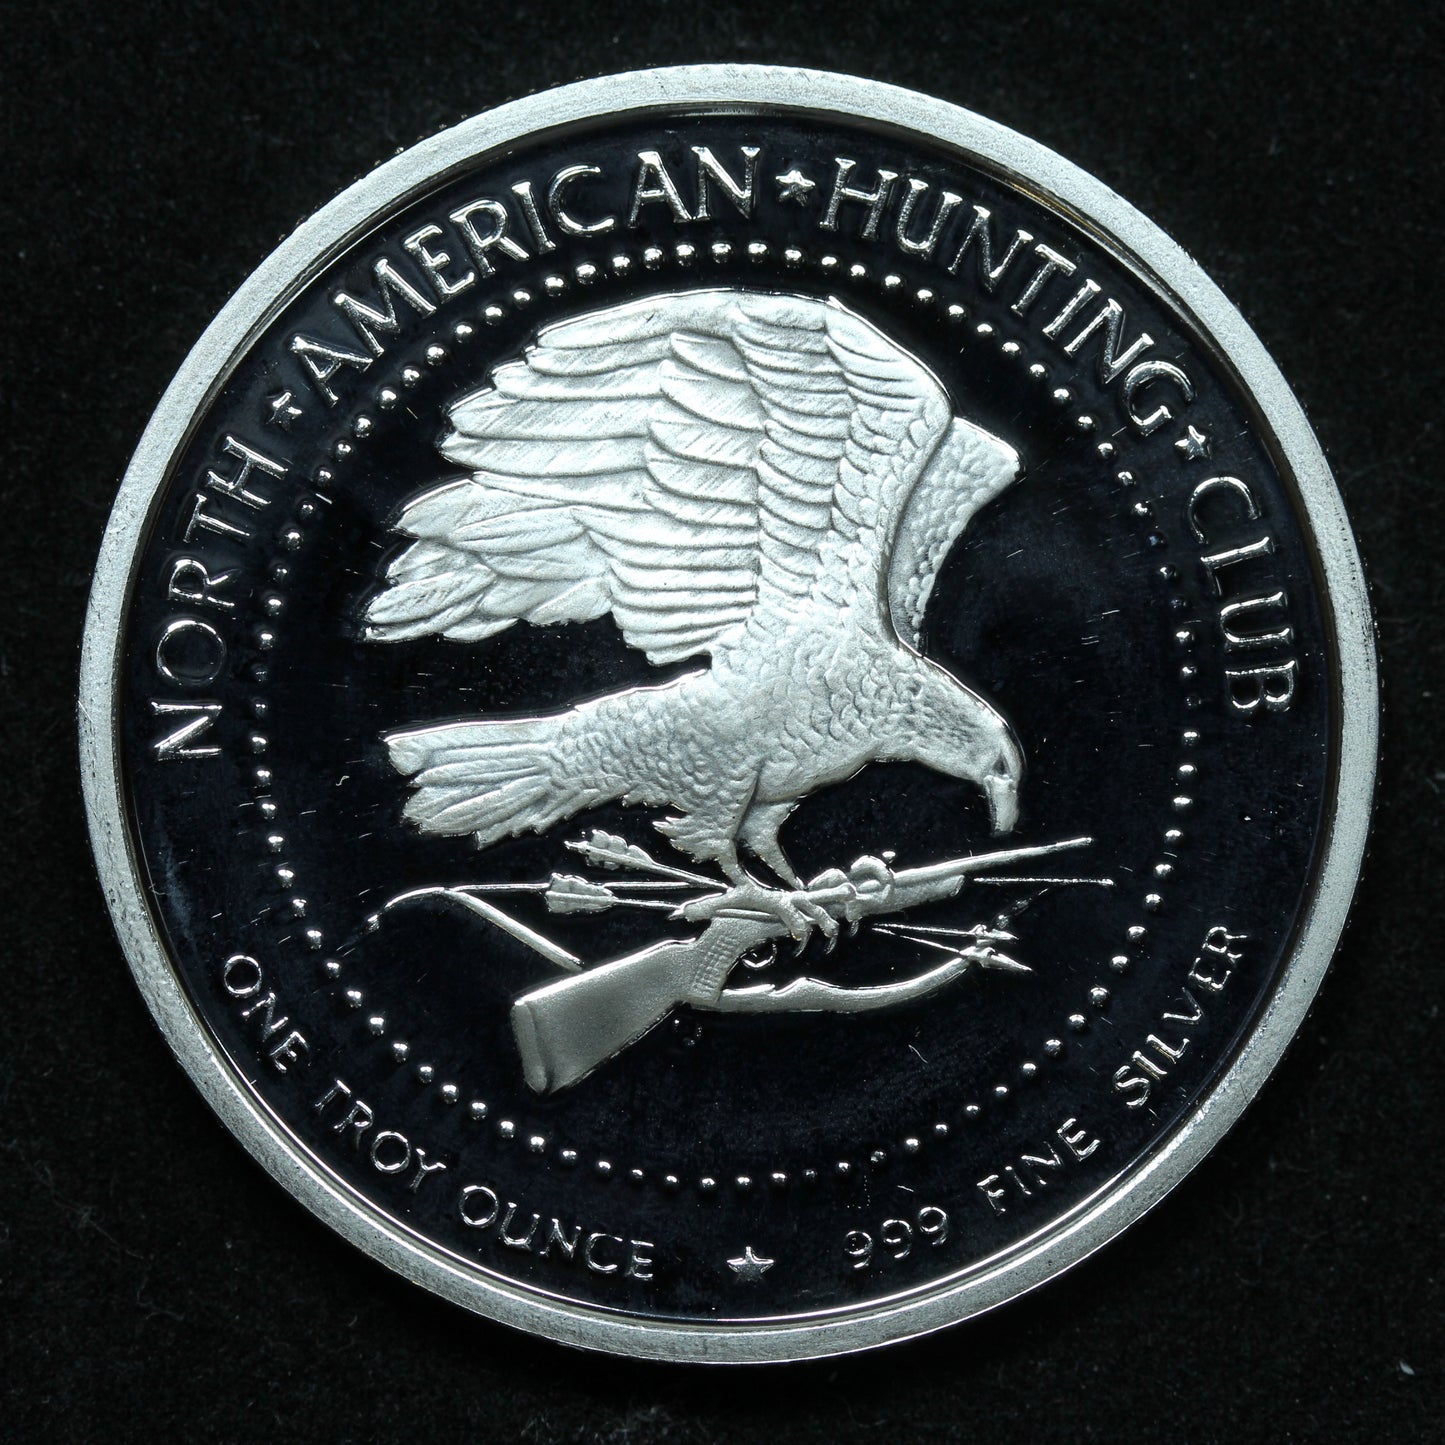 1 oz .999 Fine Silver - North American Hunting Club Bucks & Bulls - Taft Bull w/ Capsule